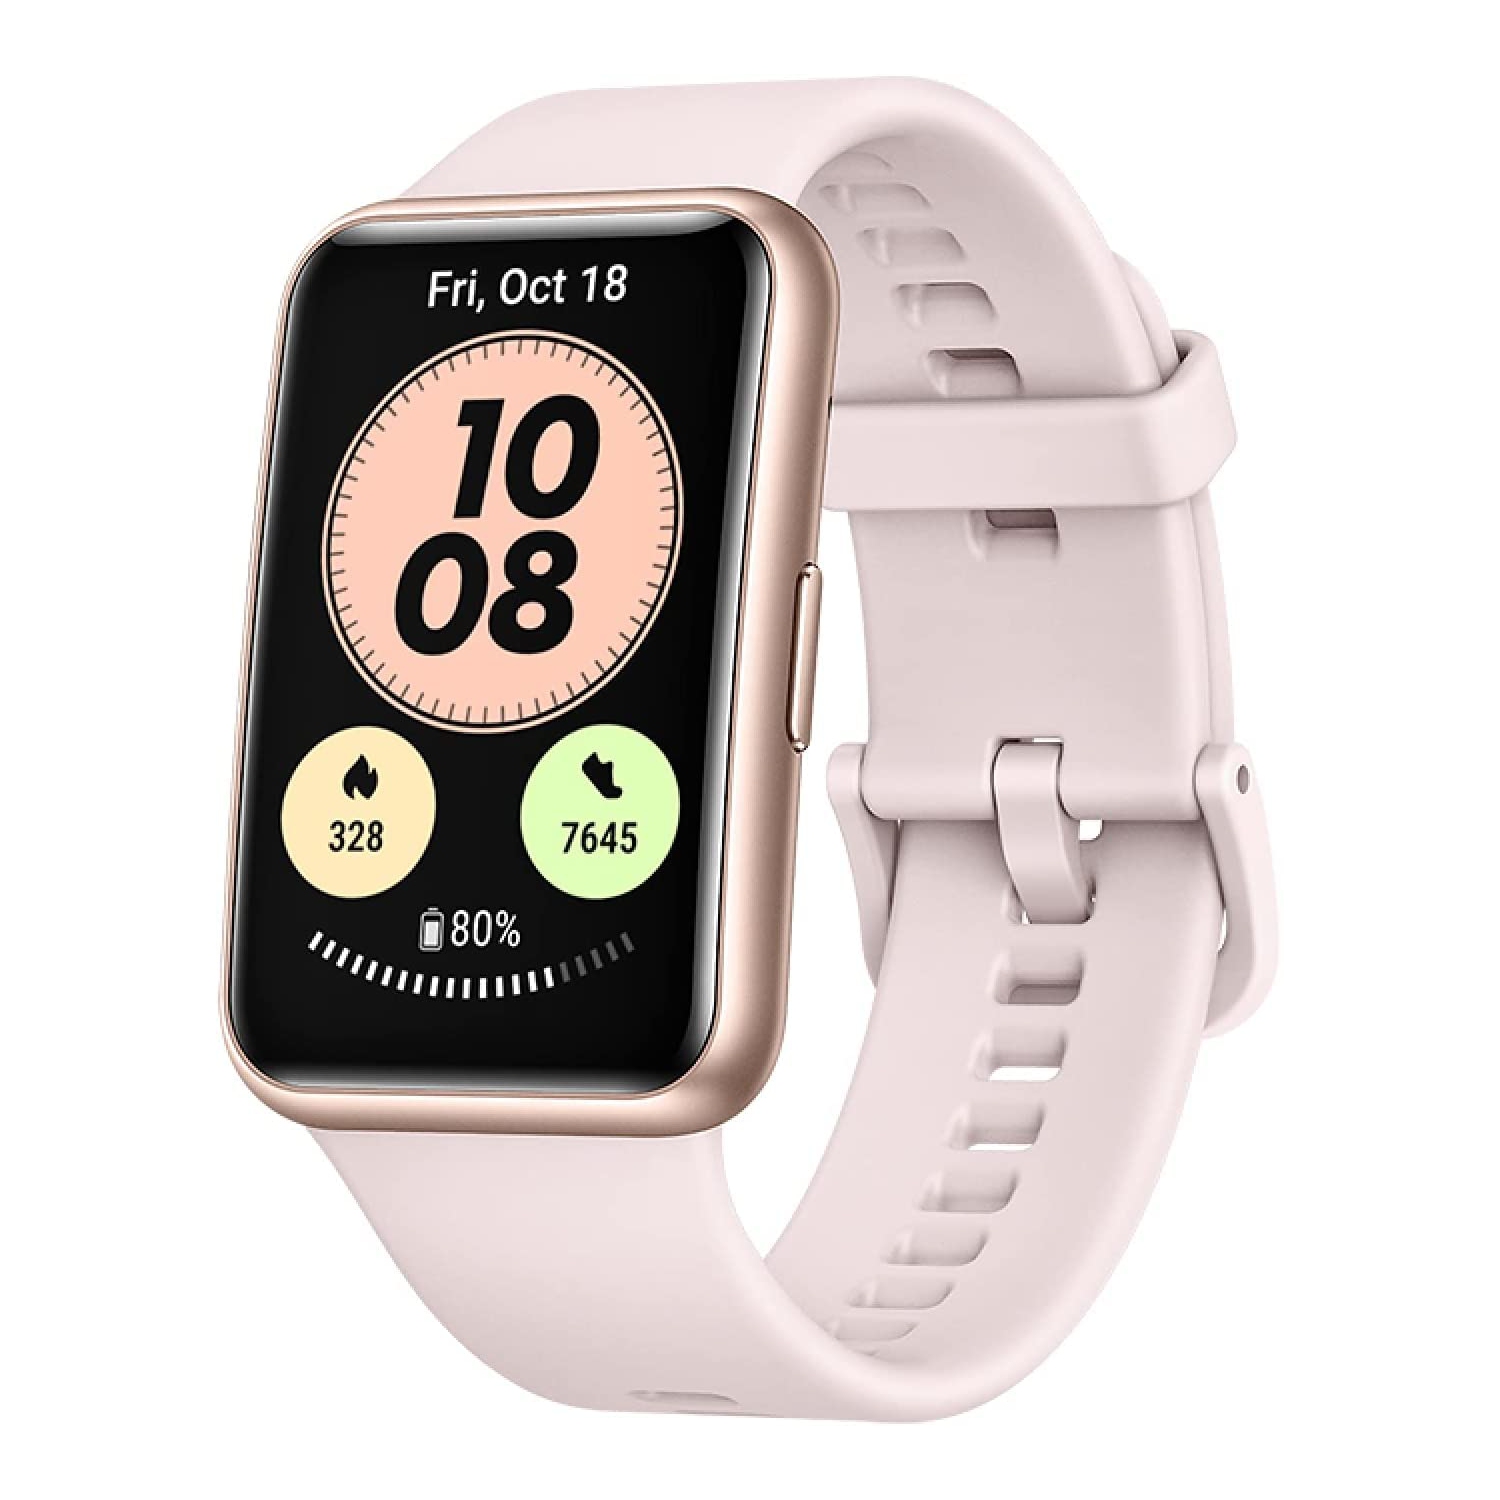 HUAWEI WATCH FIT new Smartwatch, 1.64" Vivid AMOLED Display, 97 Workout Modes, 24/7 Heart Rate Monitoring, 10-Day Battery Li